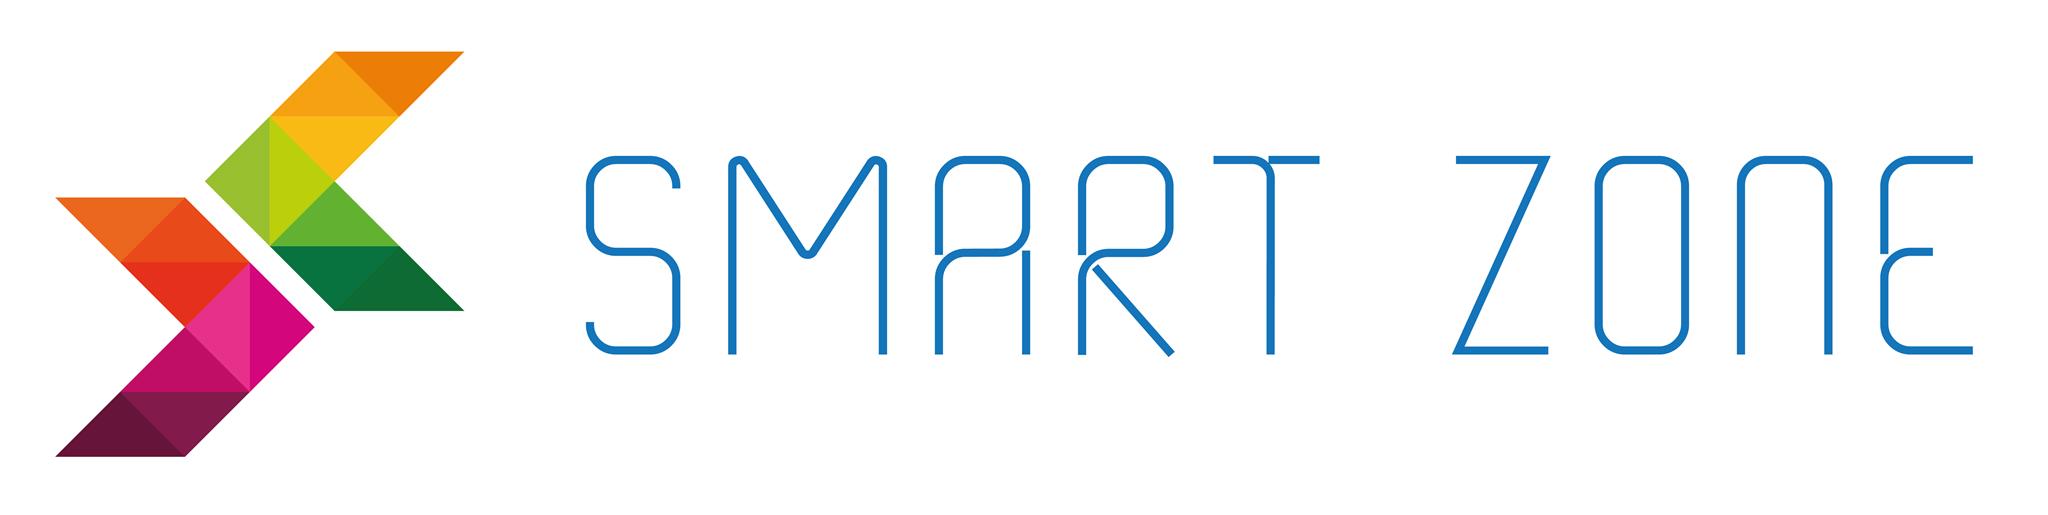 smart-zone-logo-01